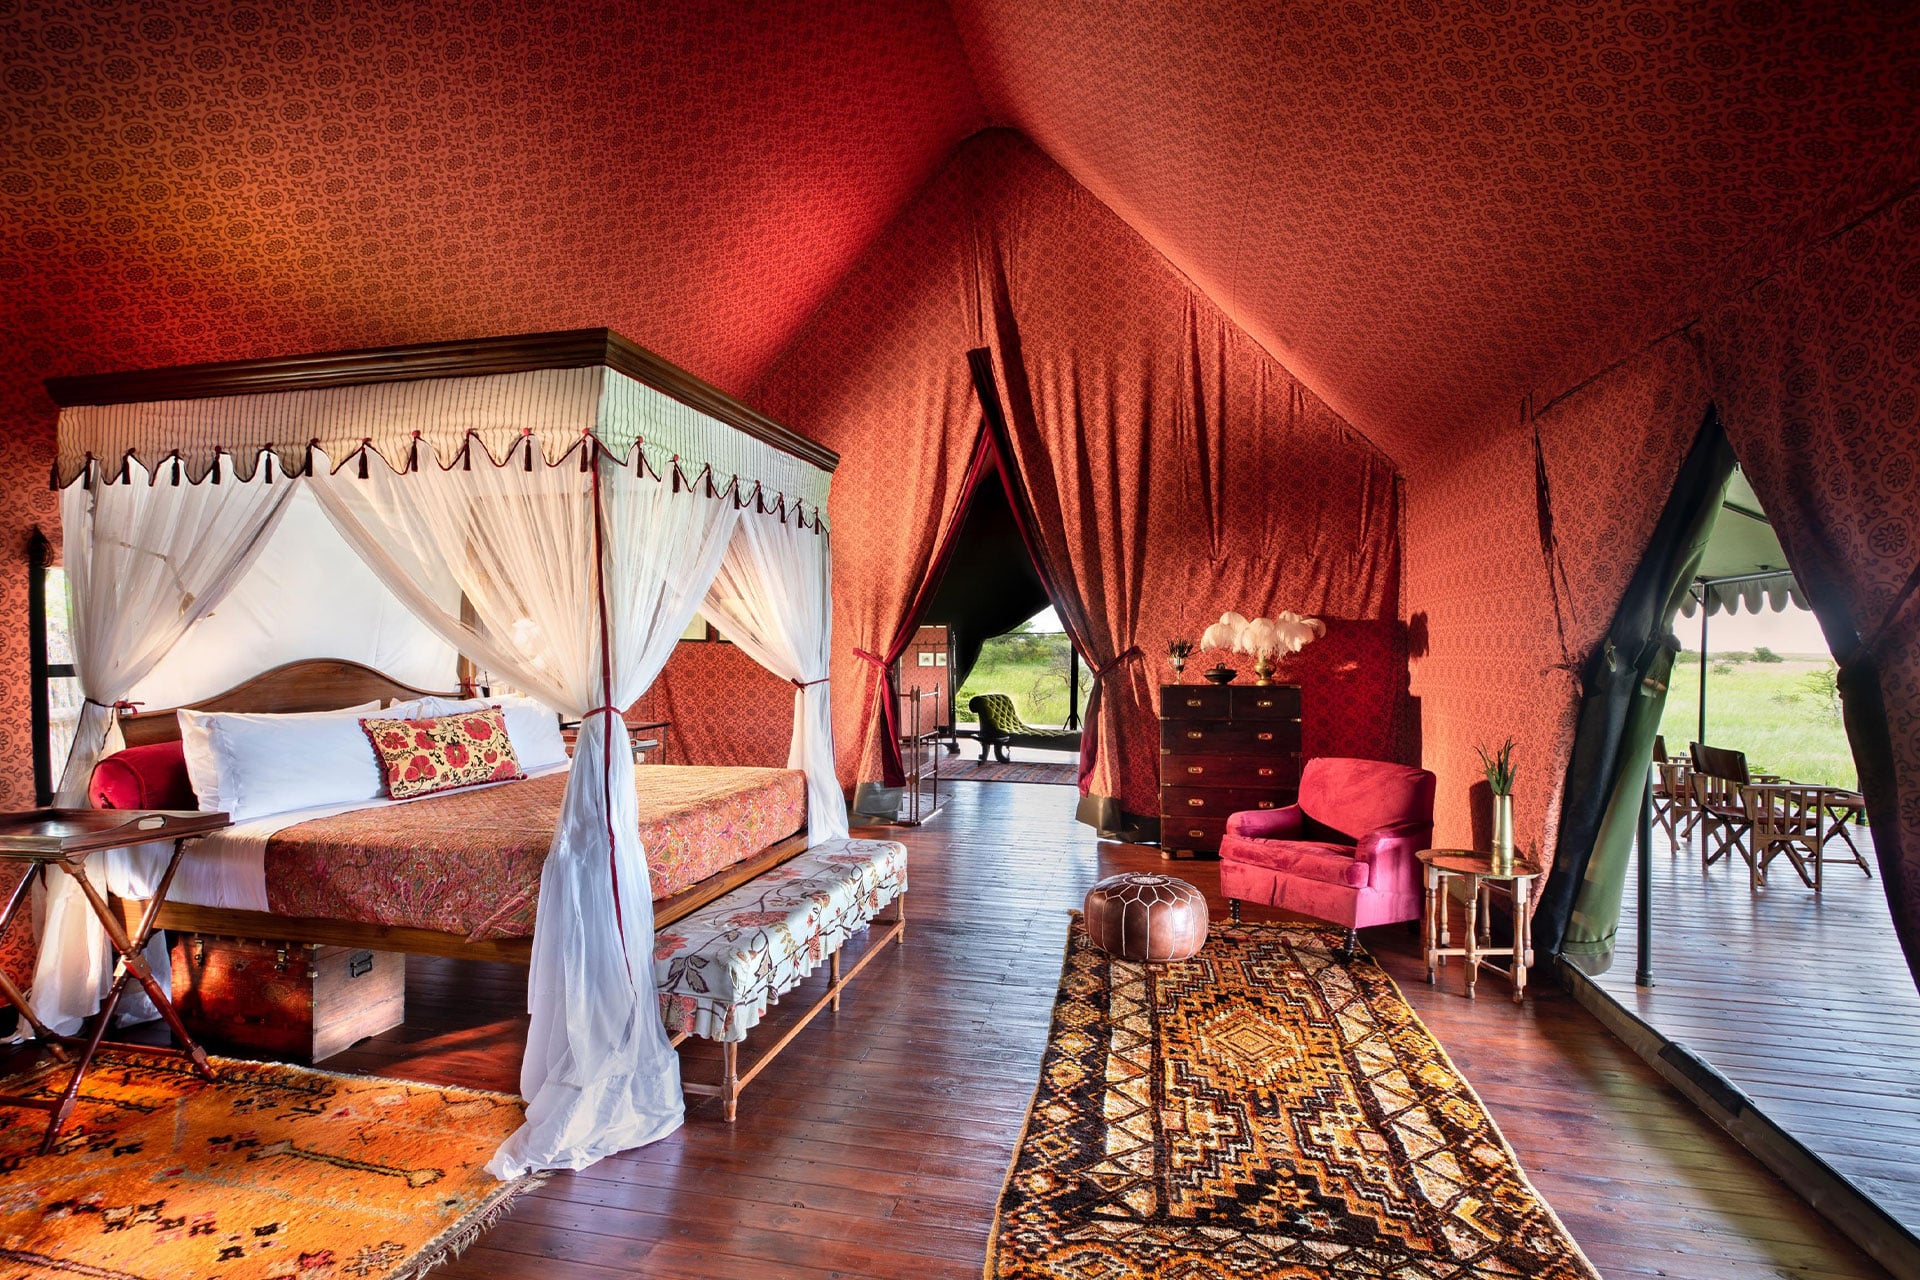 Interior bedroom of a luxury tent at Jack’s Camp in the Makgadikgadi Salt Pans in Botswana.